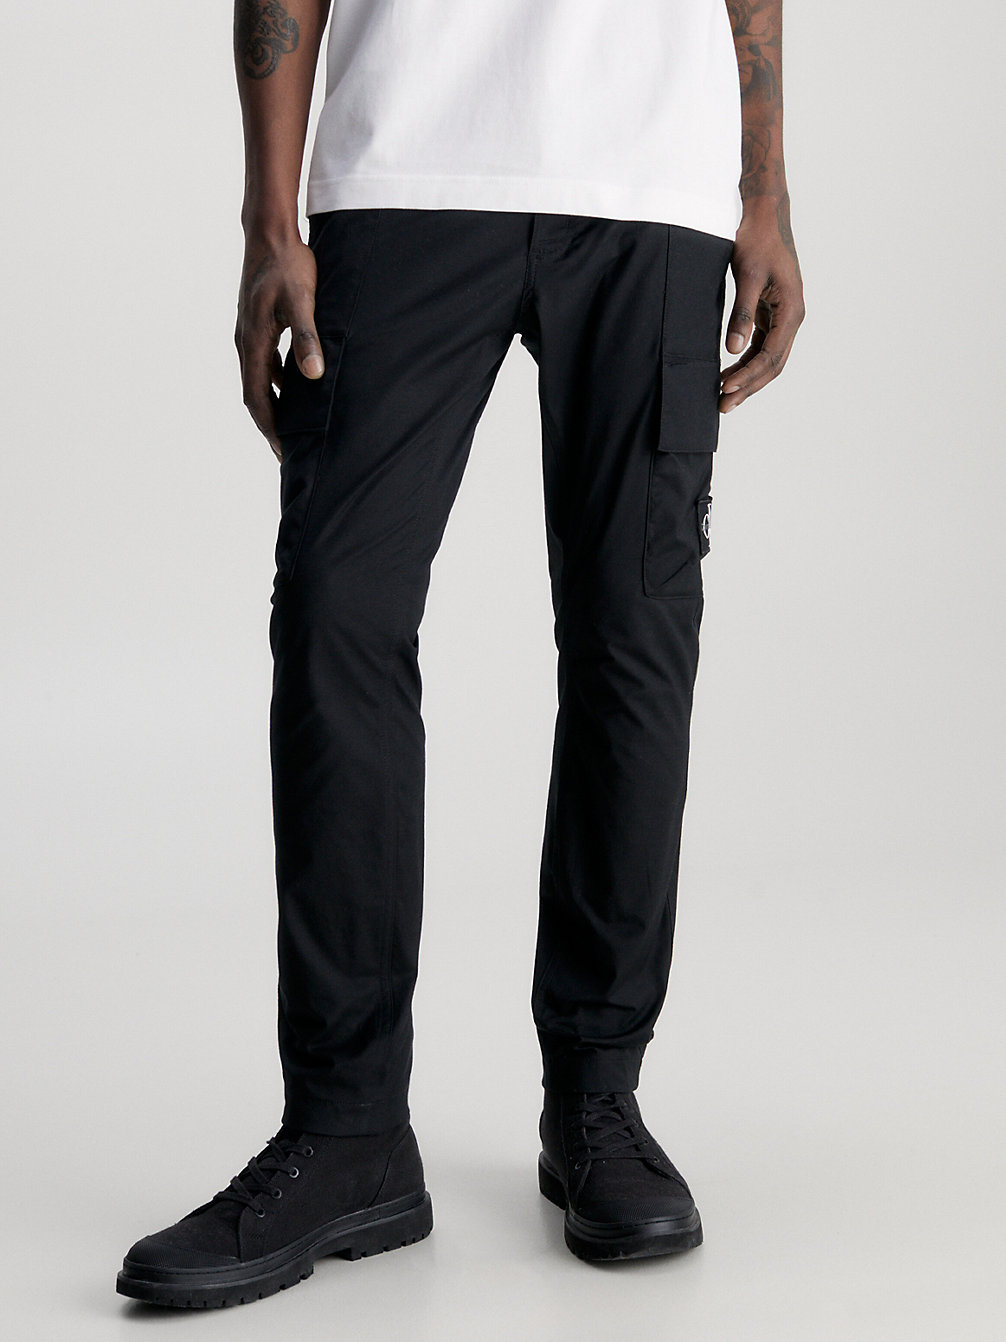 CK BLACK Pantalon Cargo Skinny Délavé undefined hommes Calvin Klein